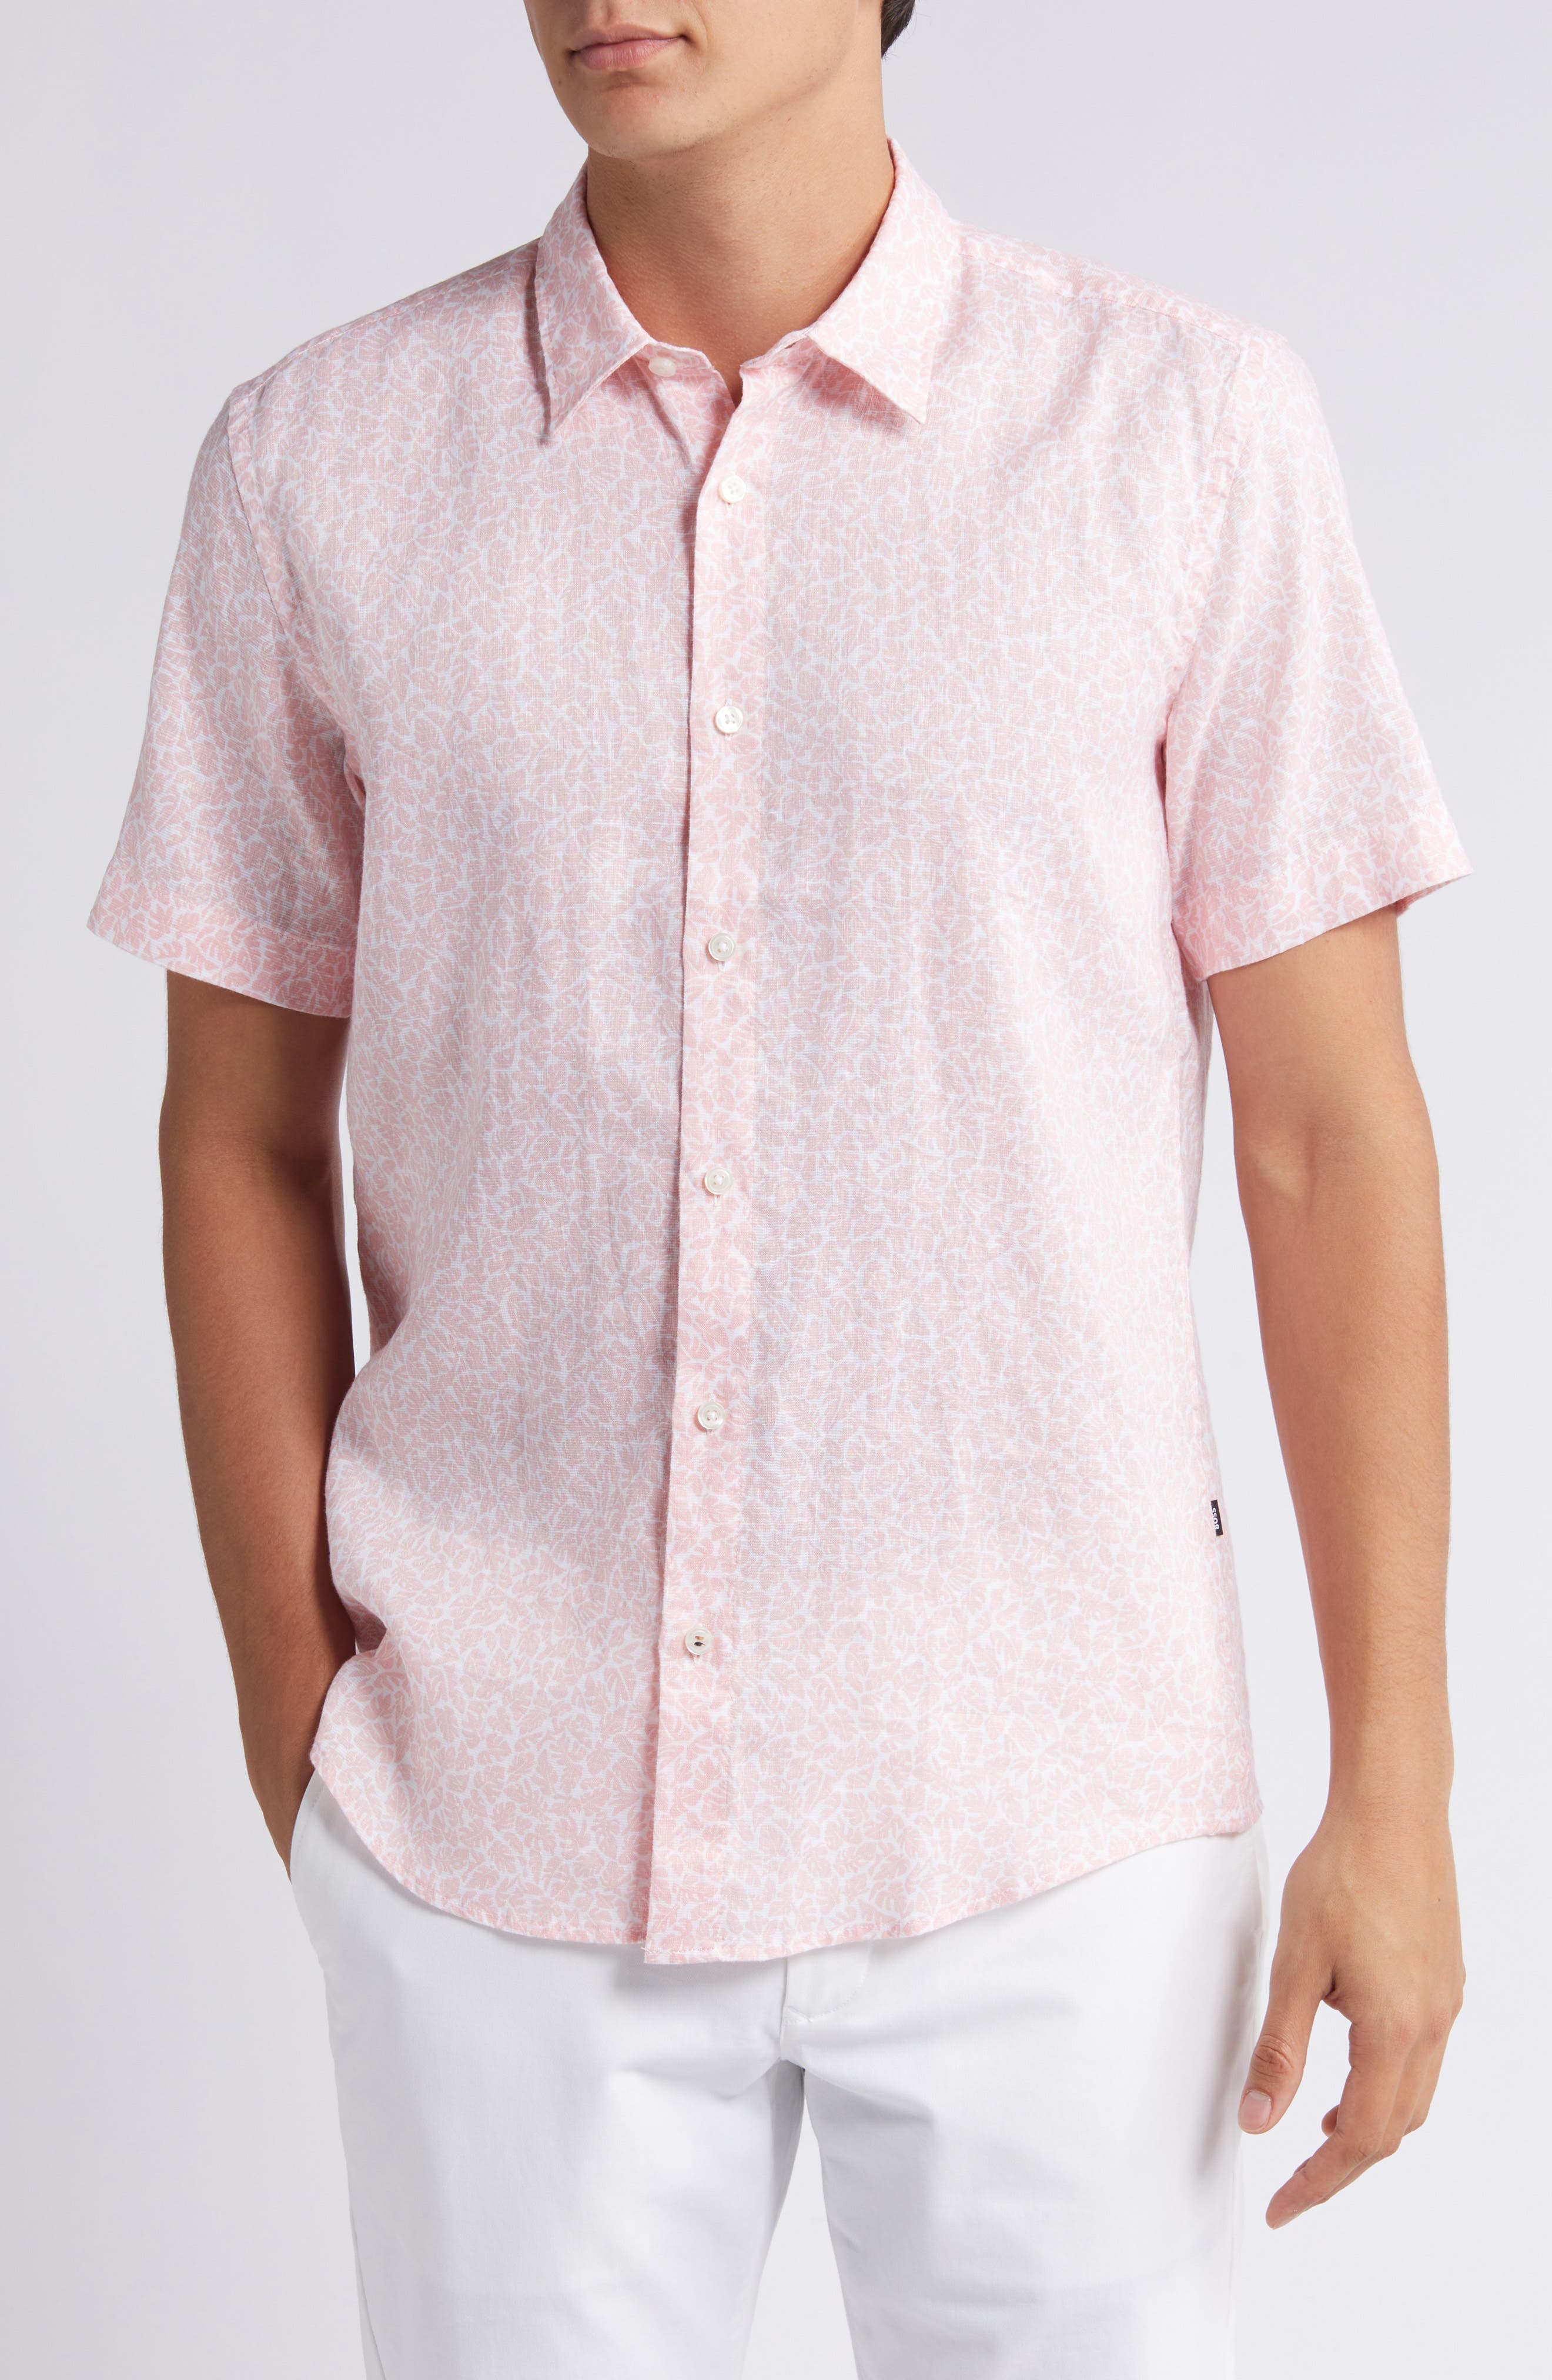 Thom Browne Kids logo-print buttoned up shirt - Pink